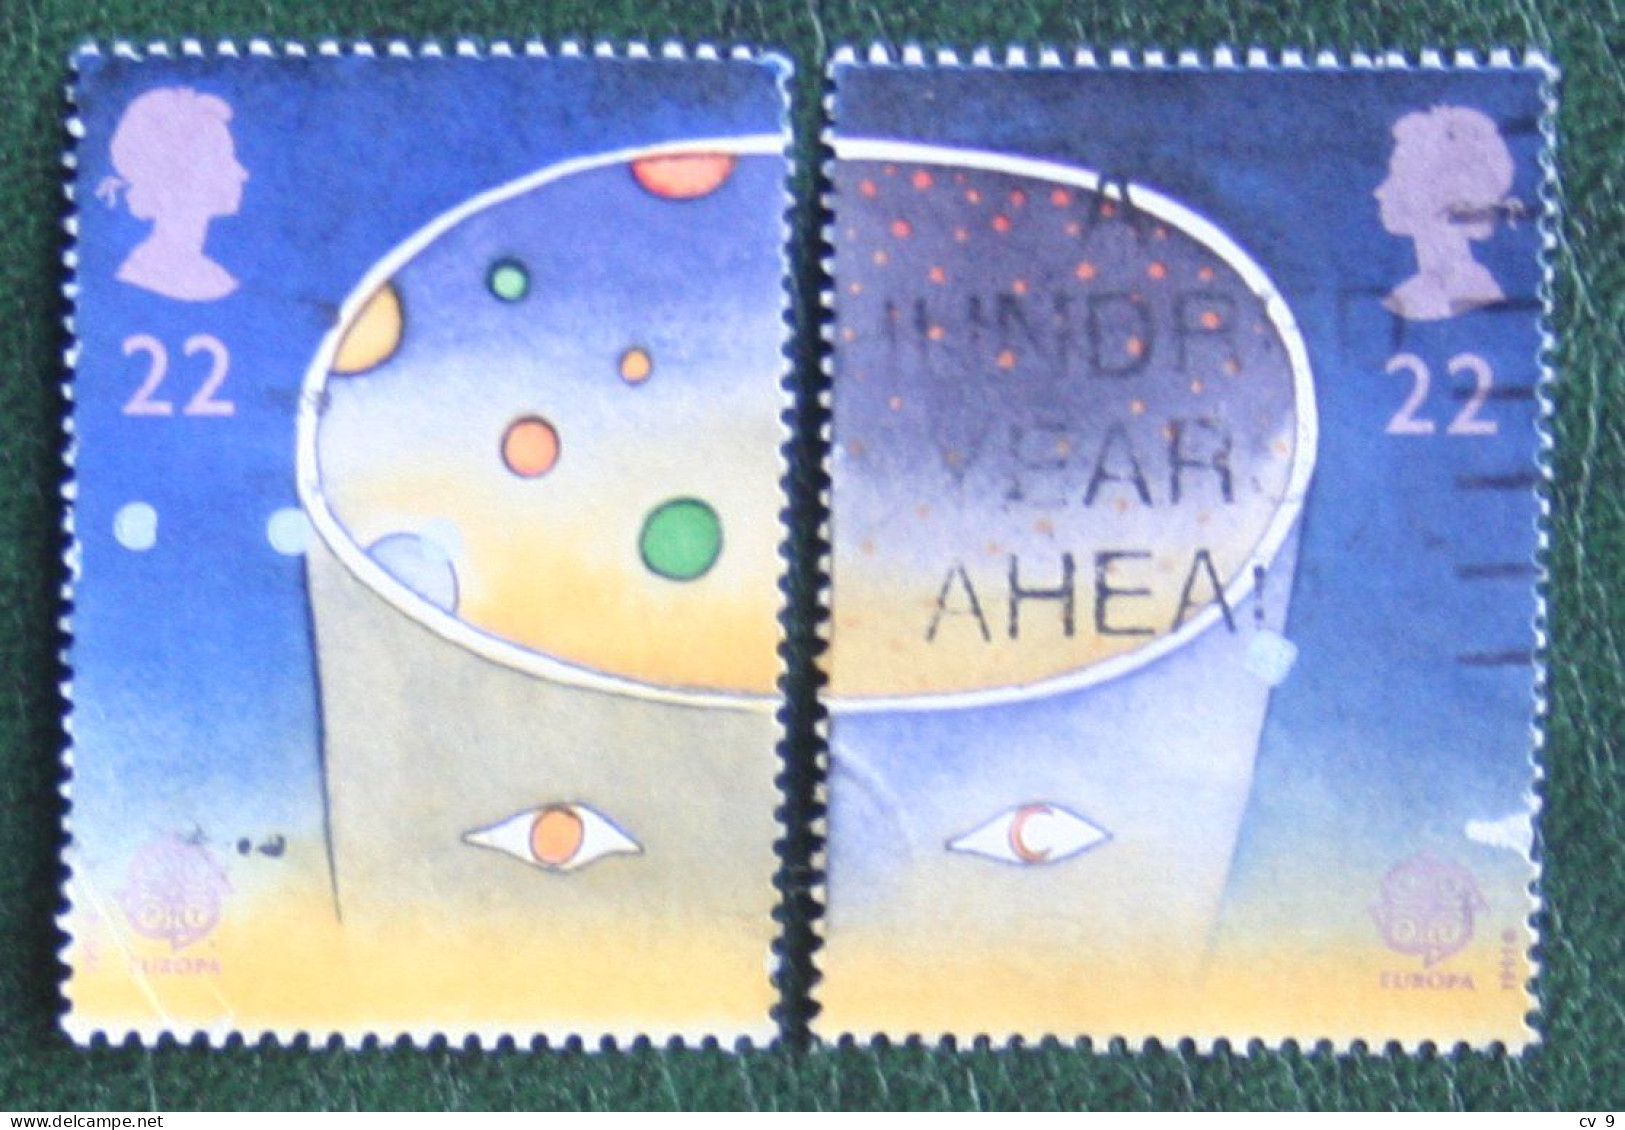 EUROPA CEPT Space (Mi 1337-1338) 1991 Used Gebruikt Oblitere ENGLAND GRANDE-BRETAGNE GB GREAT BRITAIN - Used Stamps